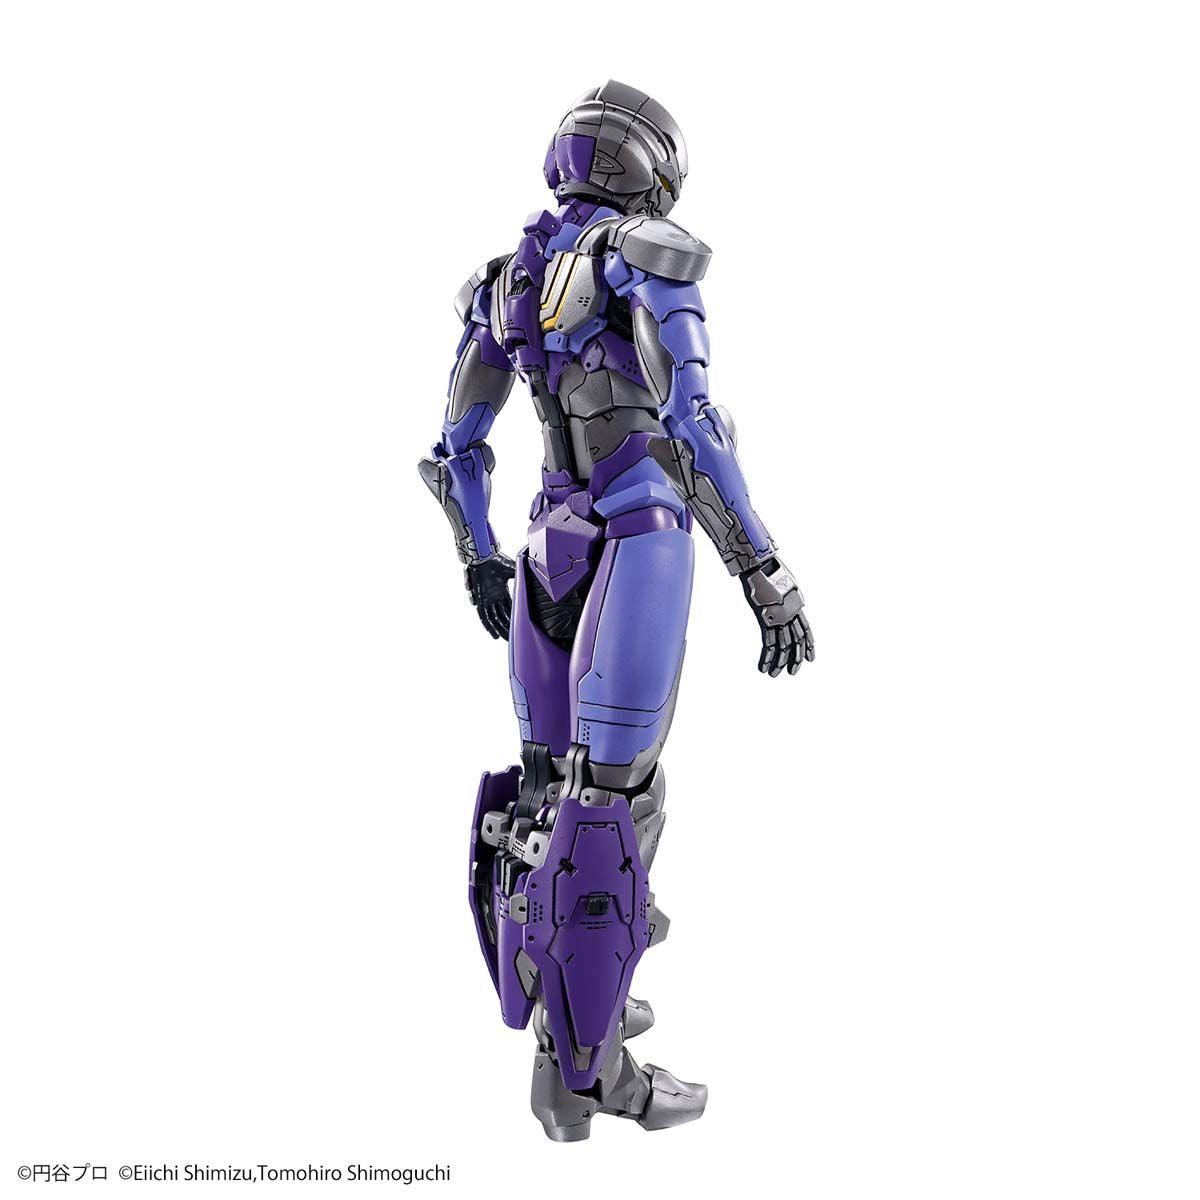 Figure-rise Standard Ultraman Suit Tiga Sky Type -Action-